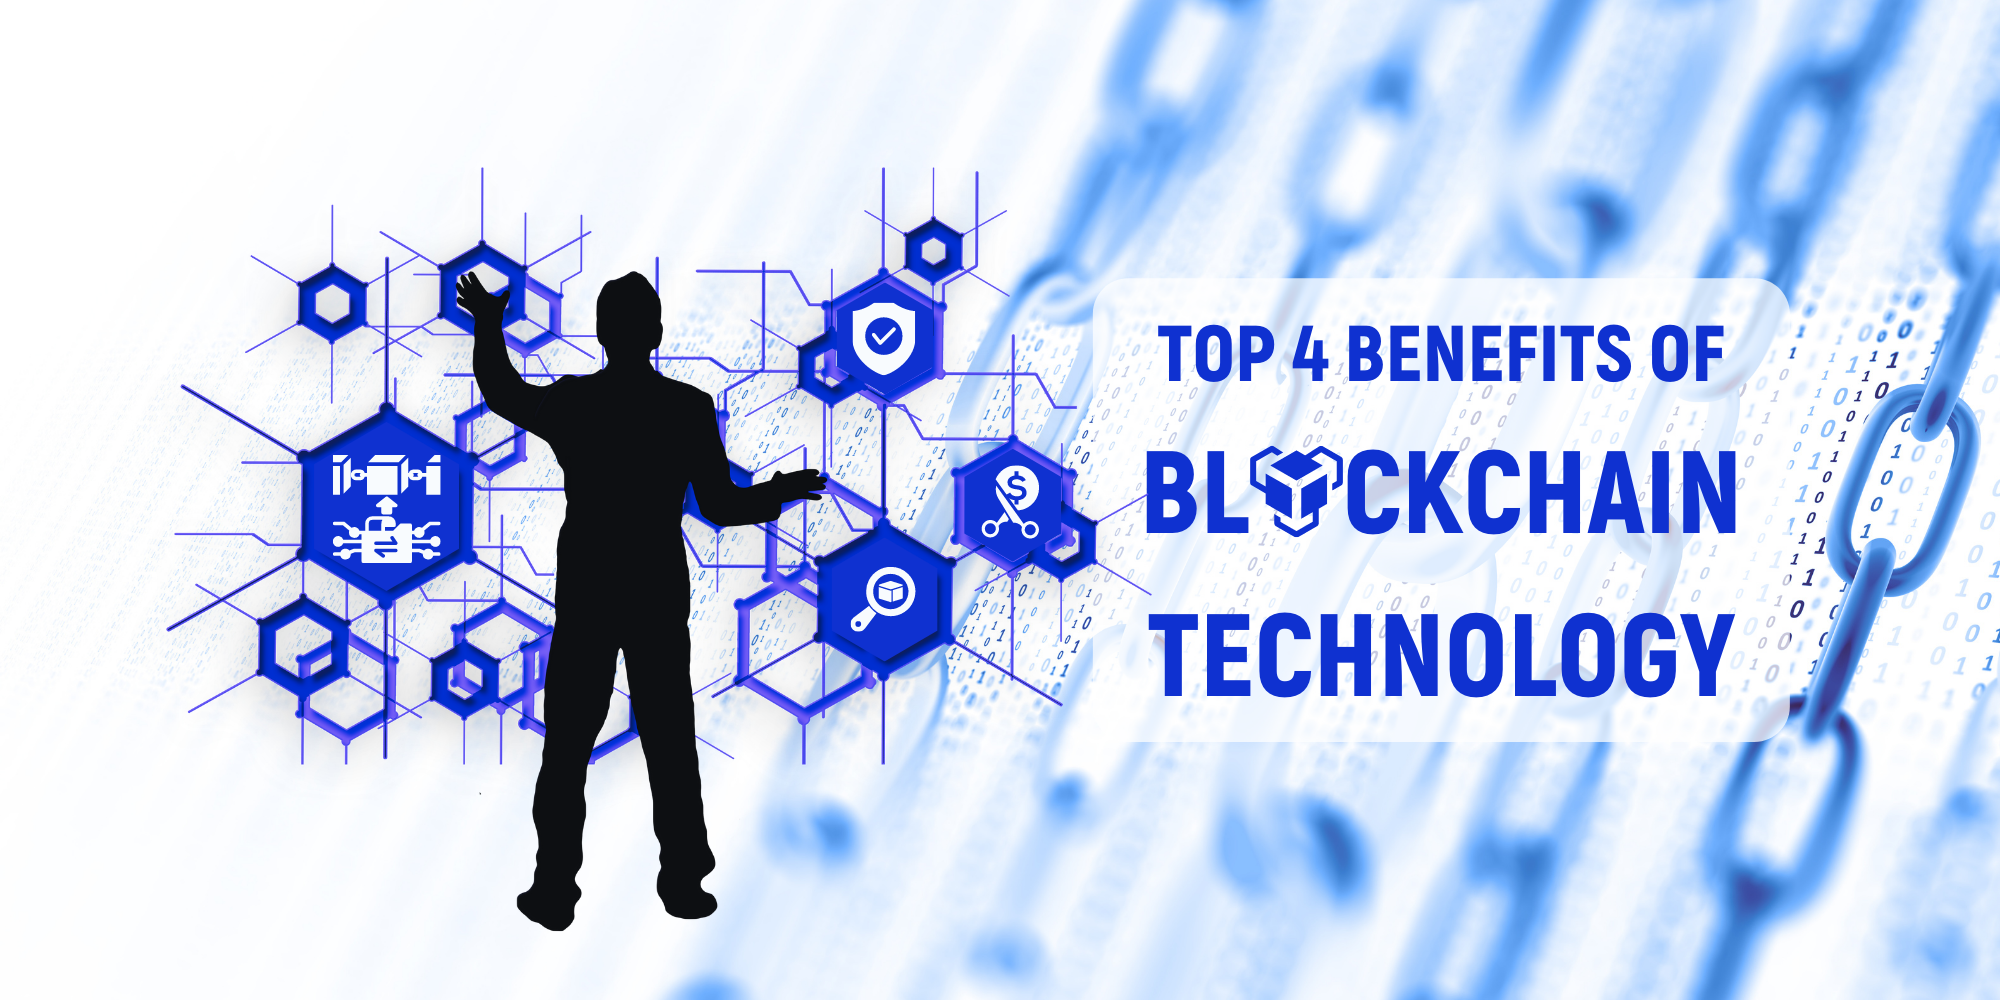 Top 4 Benefits of Blockchain Technology